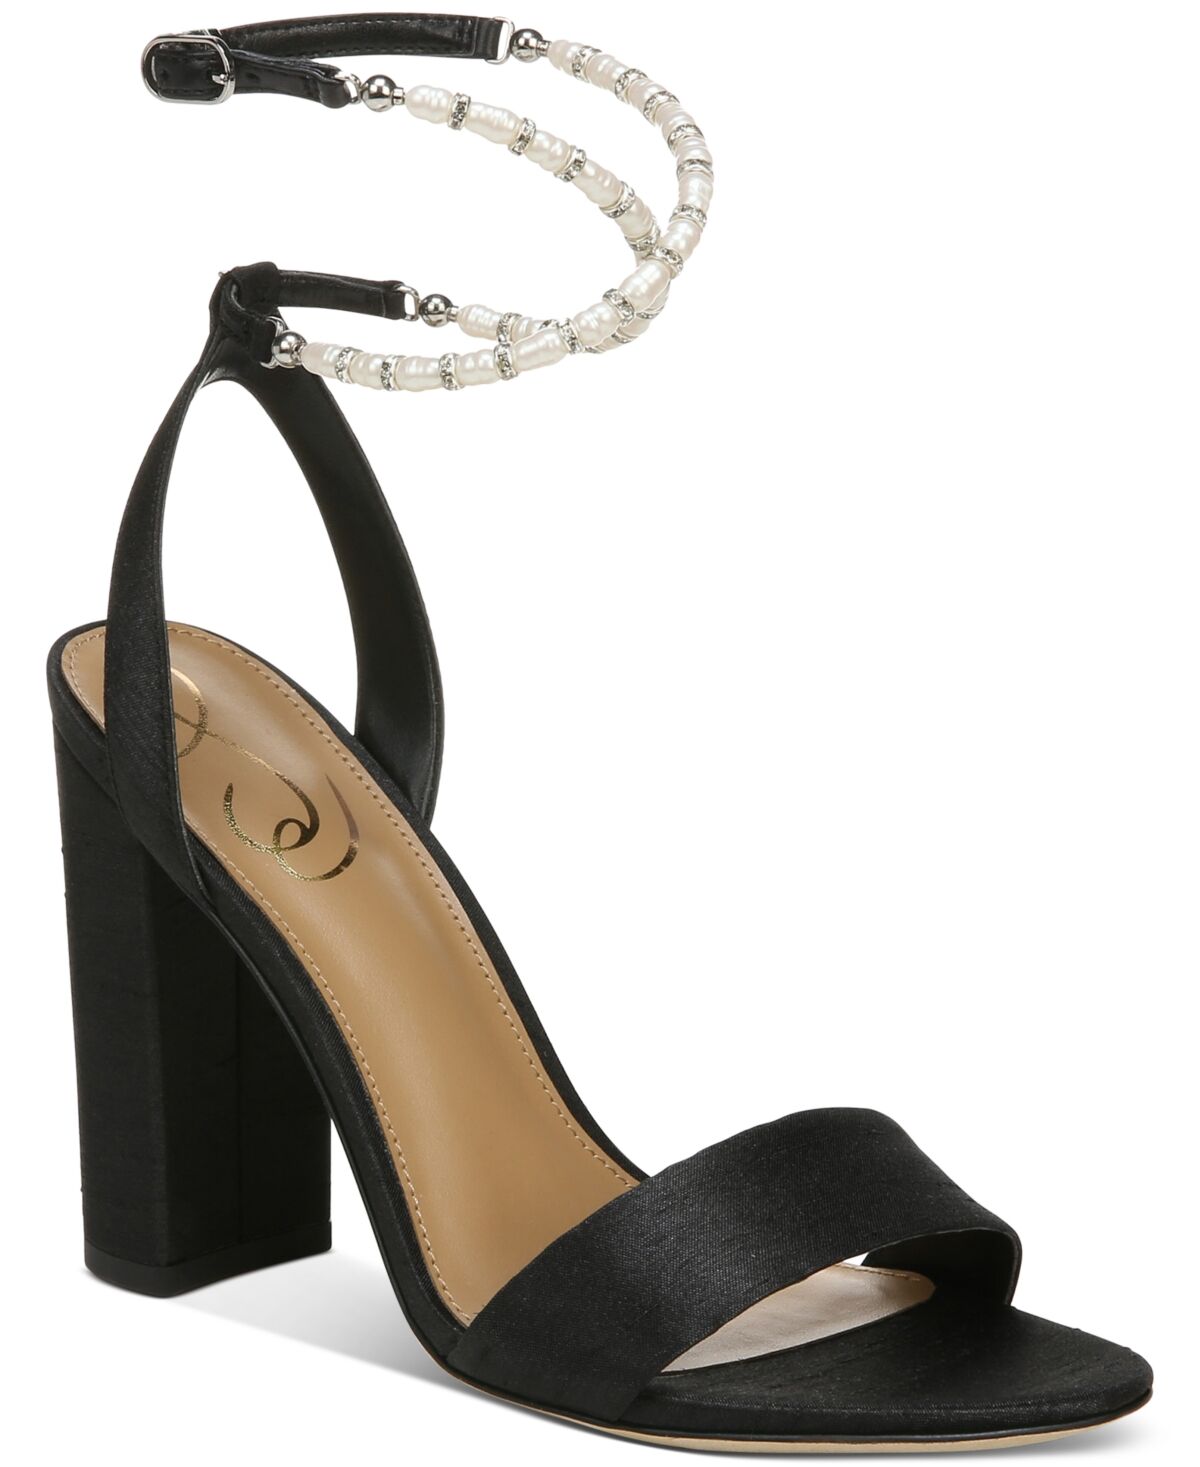 Sam Edelman Women's Yanneli Embellished Ankle-Strap Sandals - Black